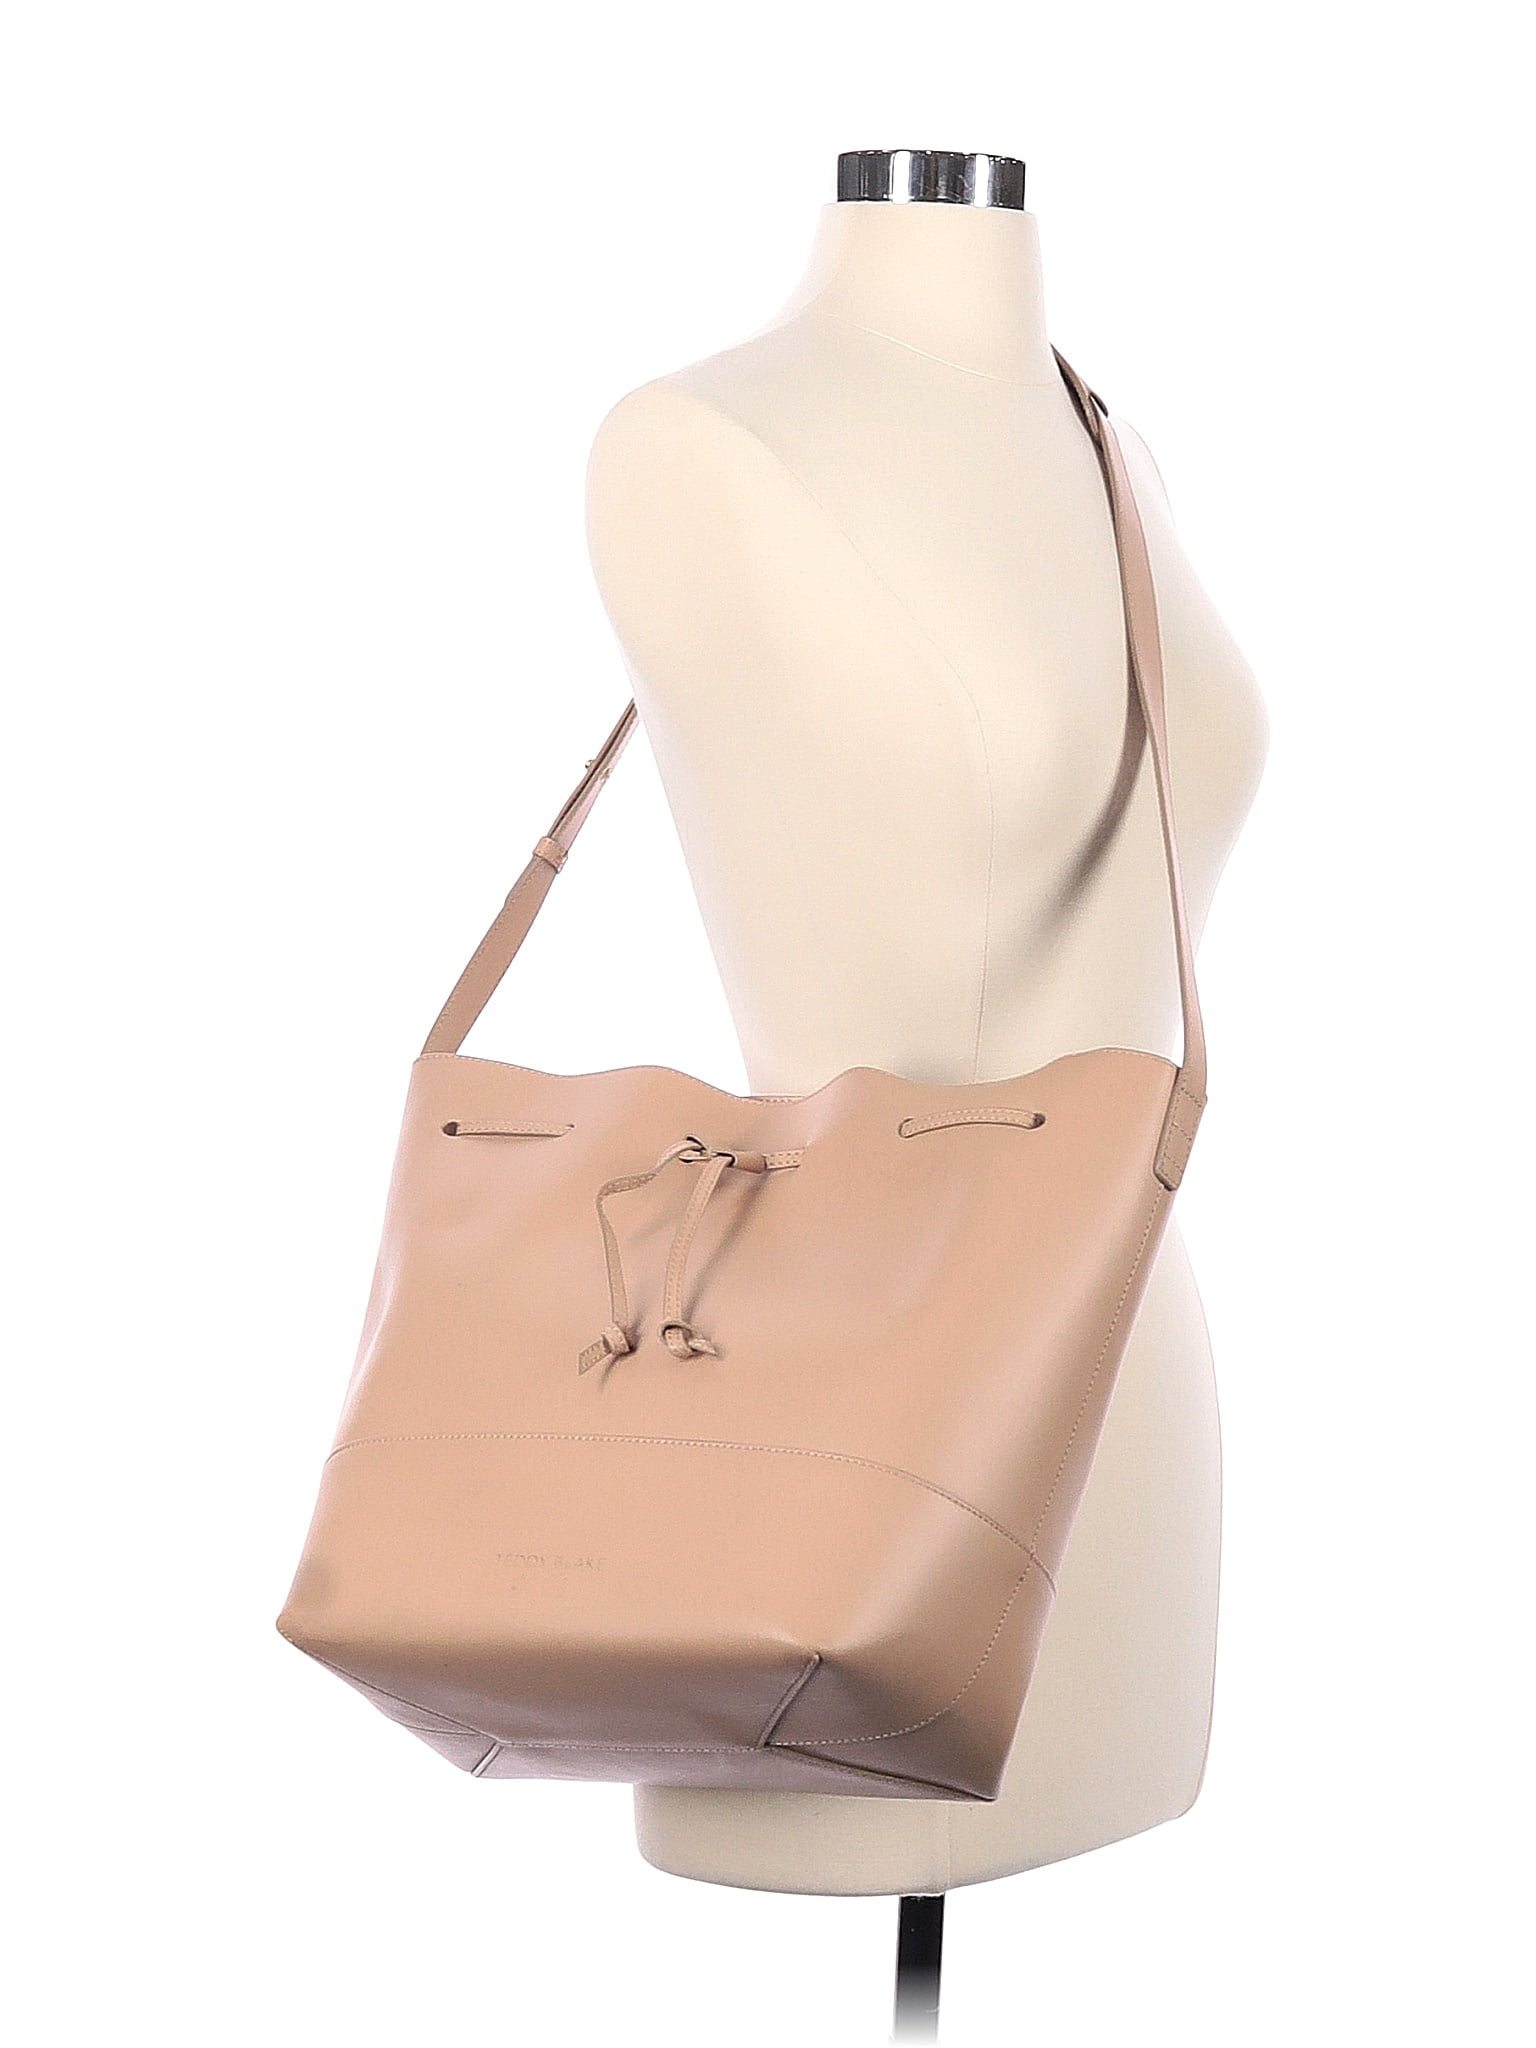 Teddy Blake genuine leather Eva bag for Sale in Pembroke Pines, FL - OfferUp